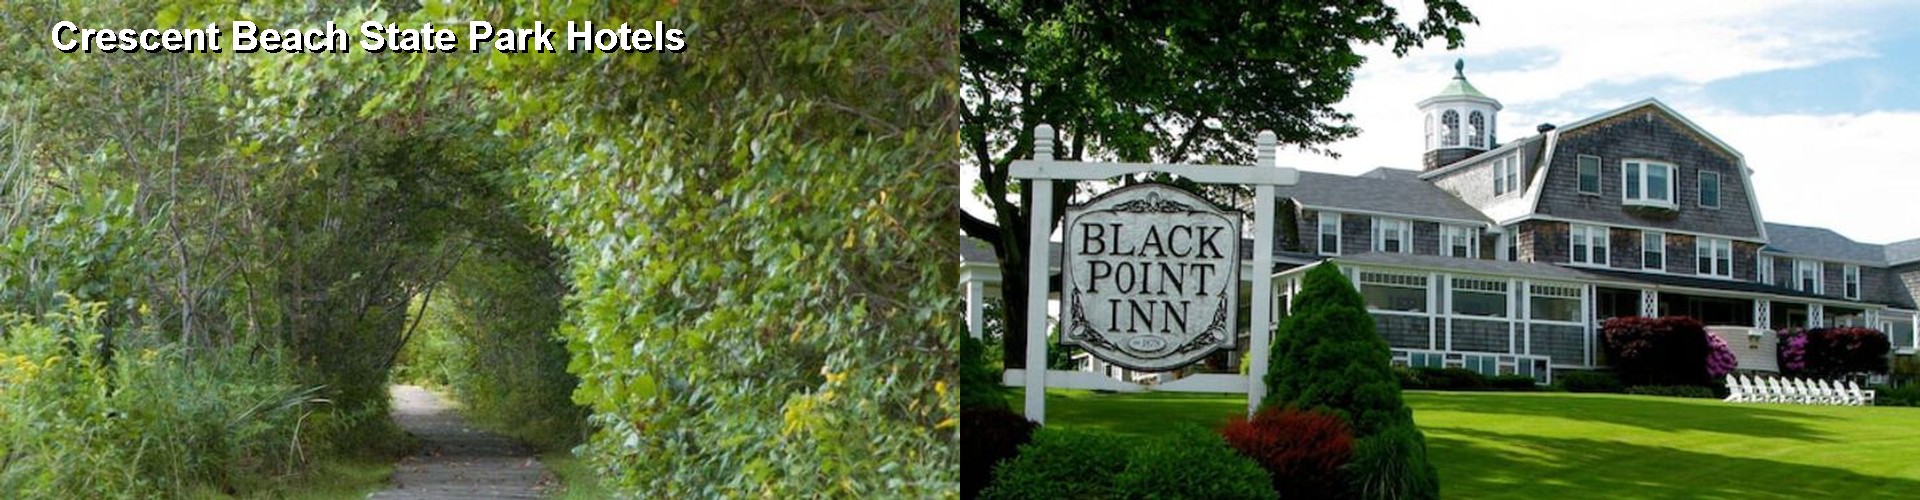 5 Best Hotels near Crescent Beach State Park